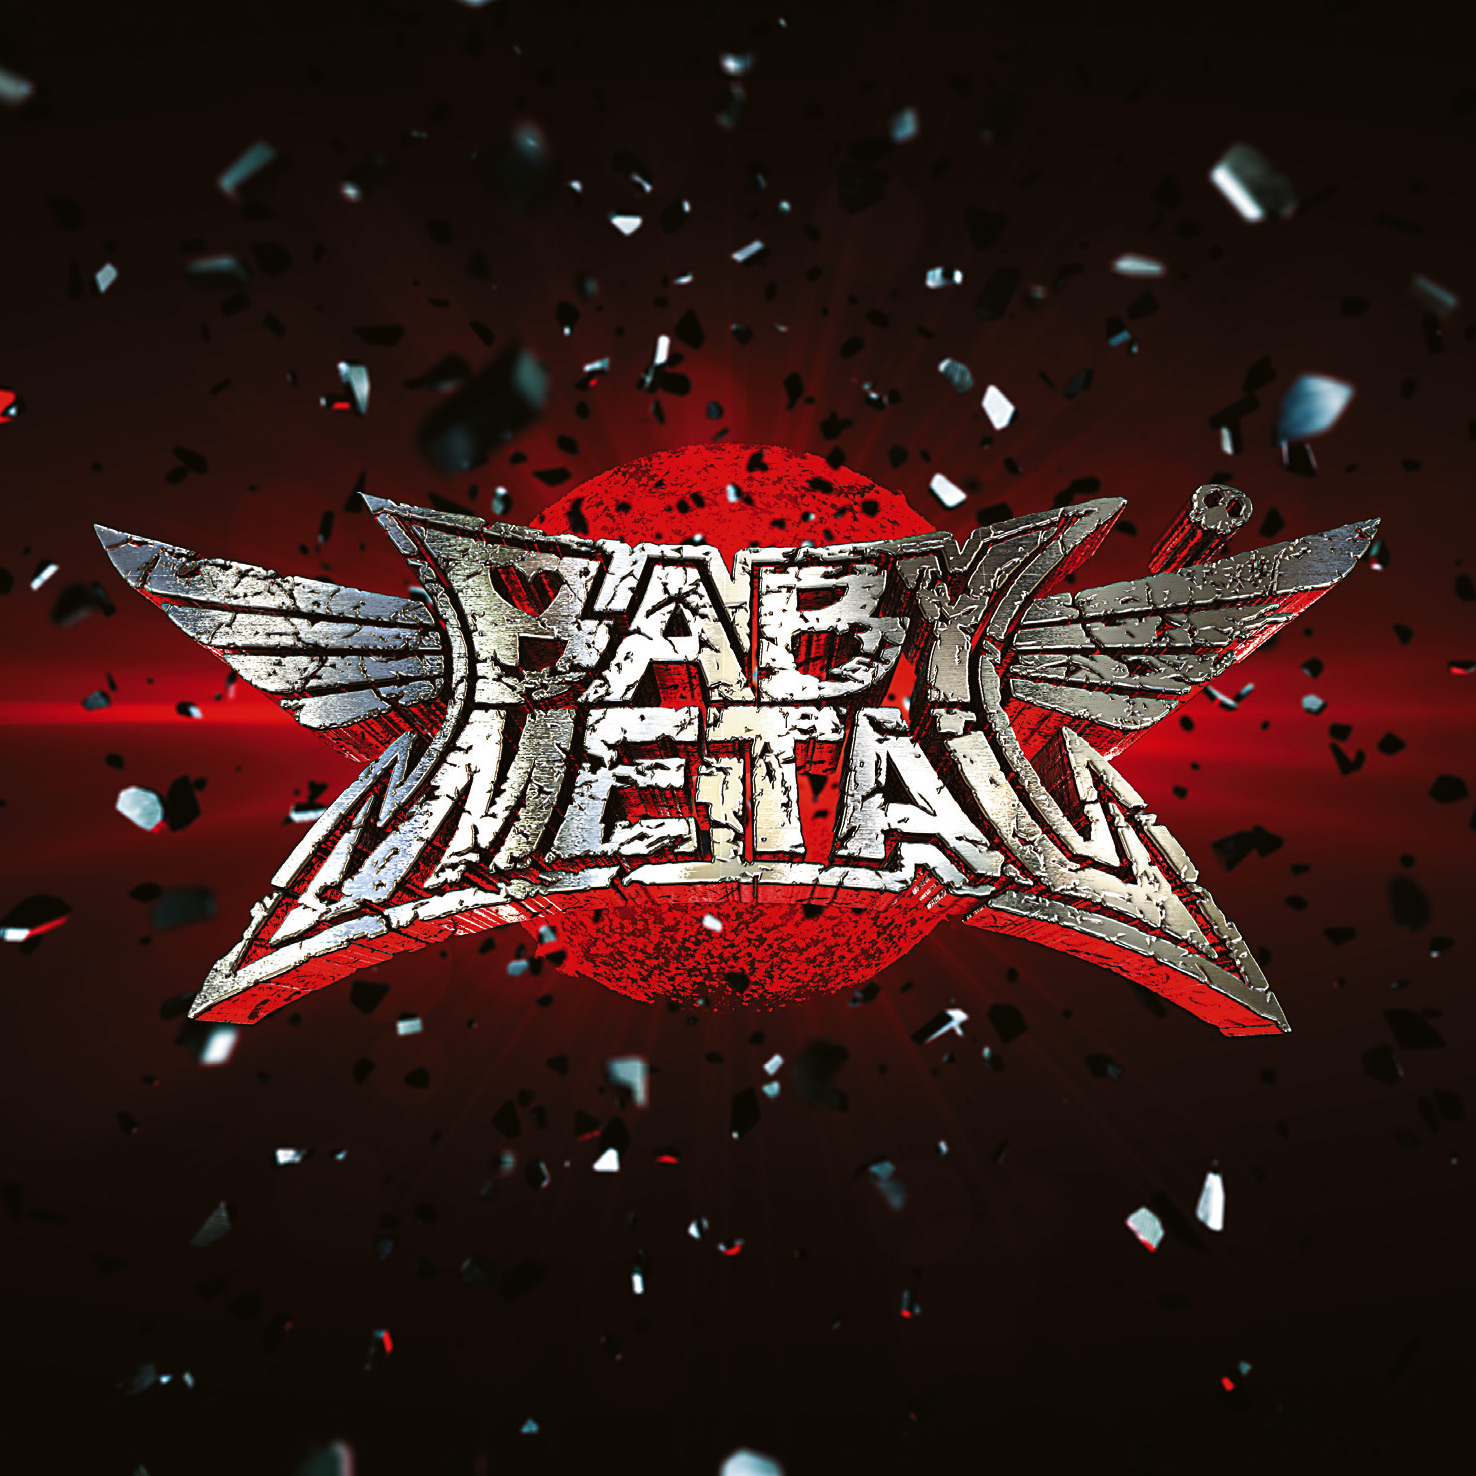 Babymetal - Babymetal - CD